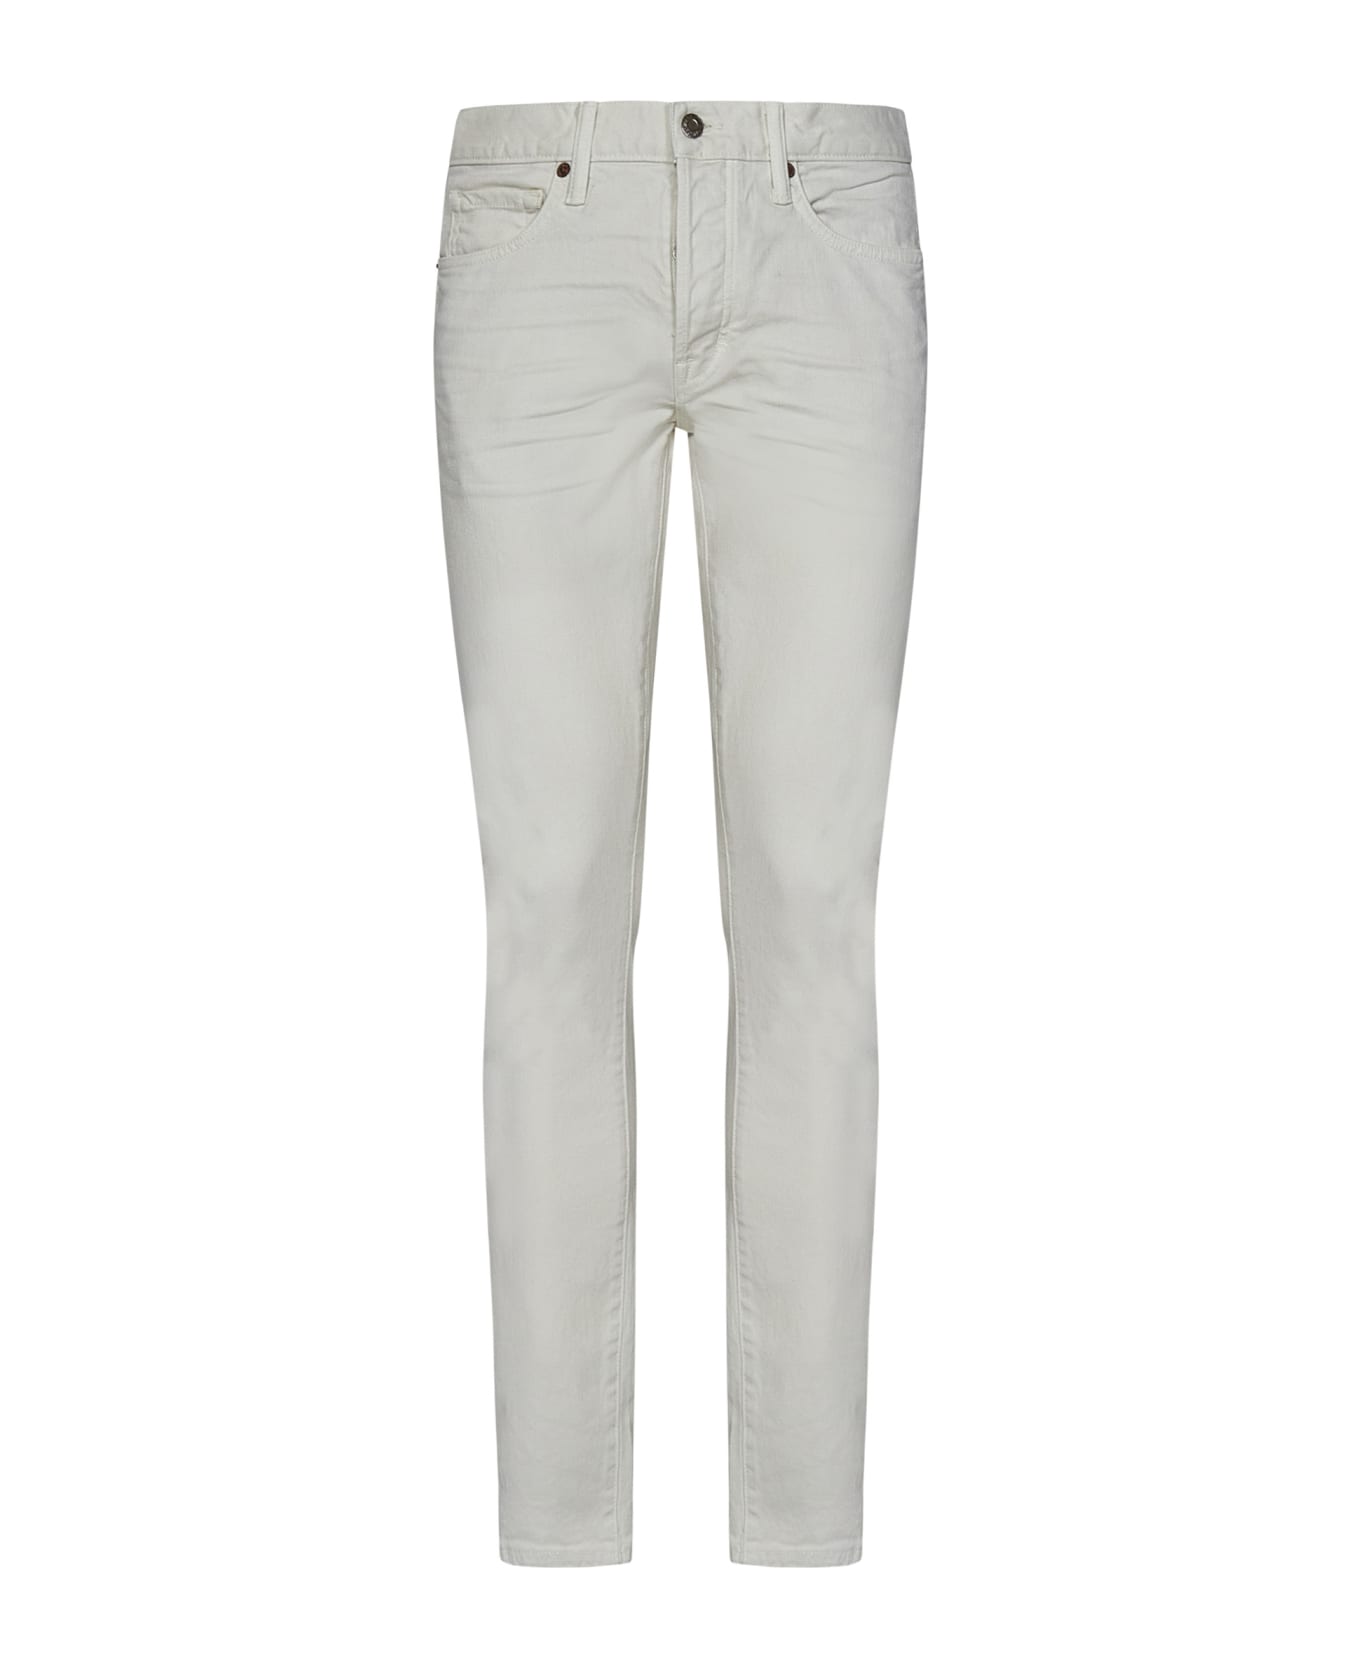 Tom Ford Jeans - White